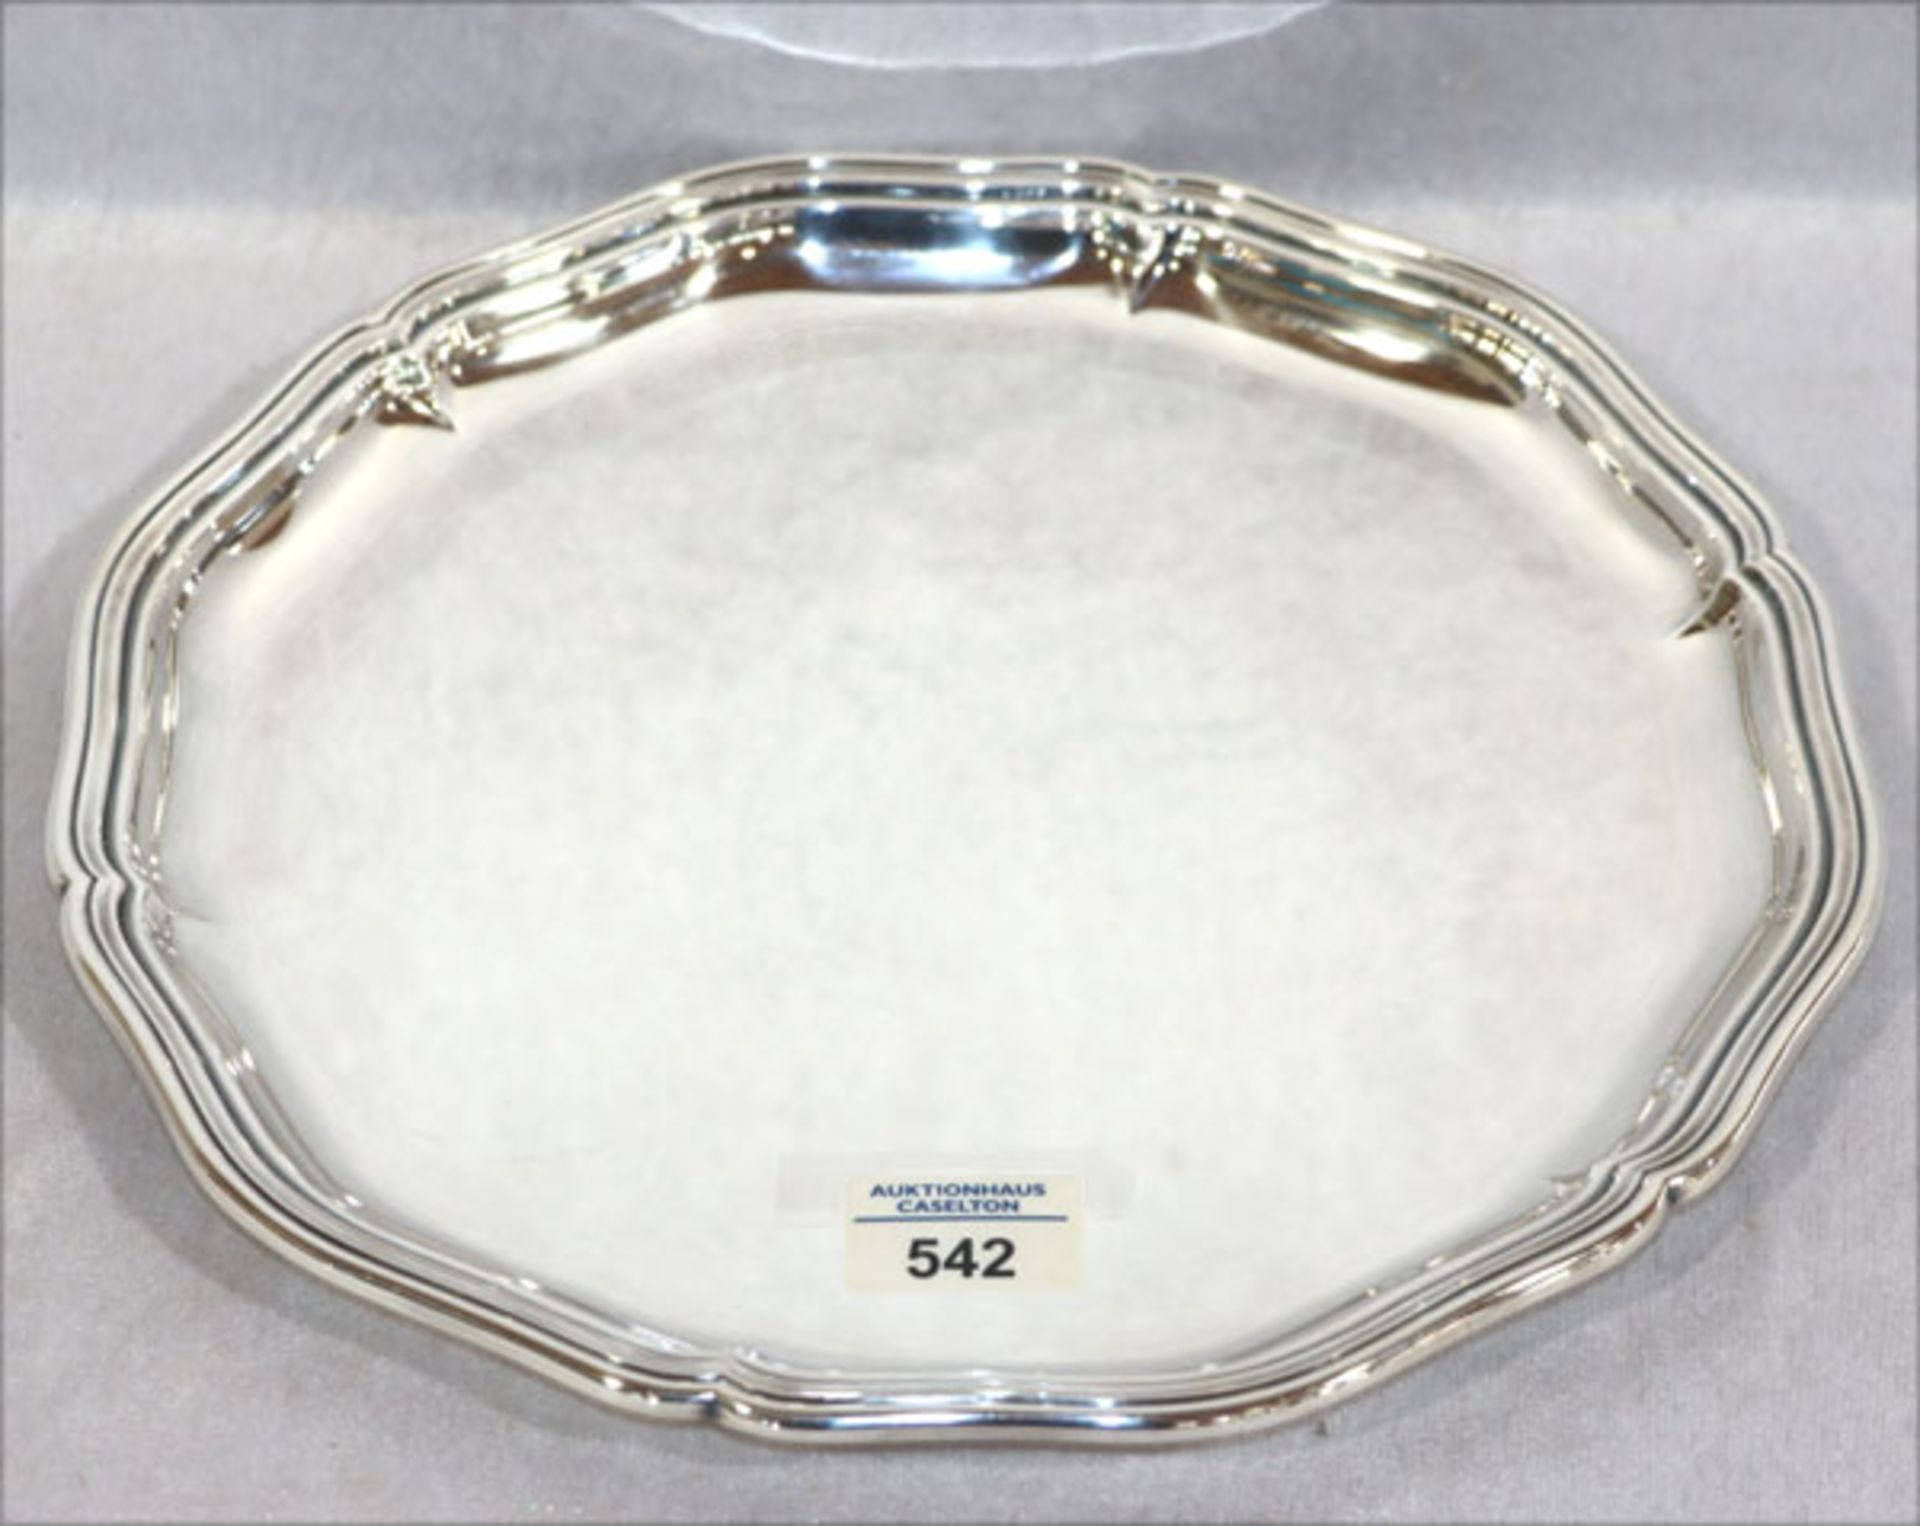 Tablett mit geschwungenem Rand, 830 Silber, 645 gr., rückseitig mit gravierter Widmung, D 33 cm,